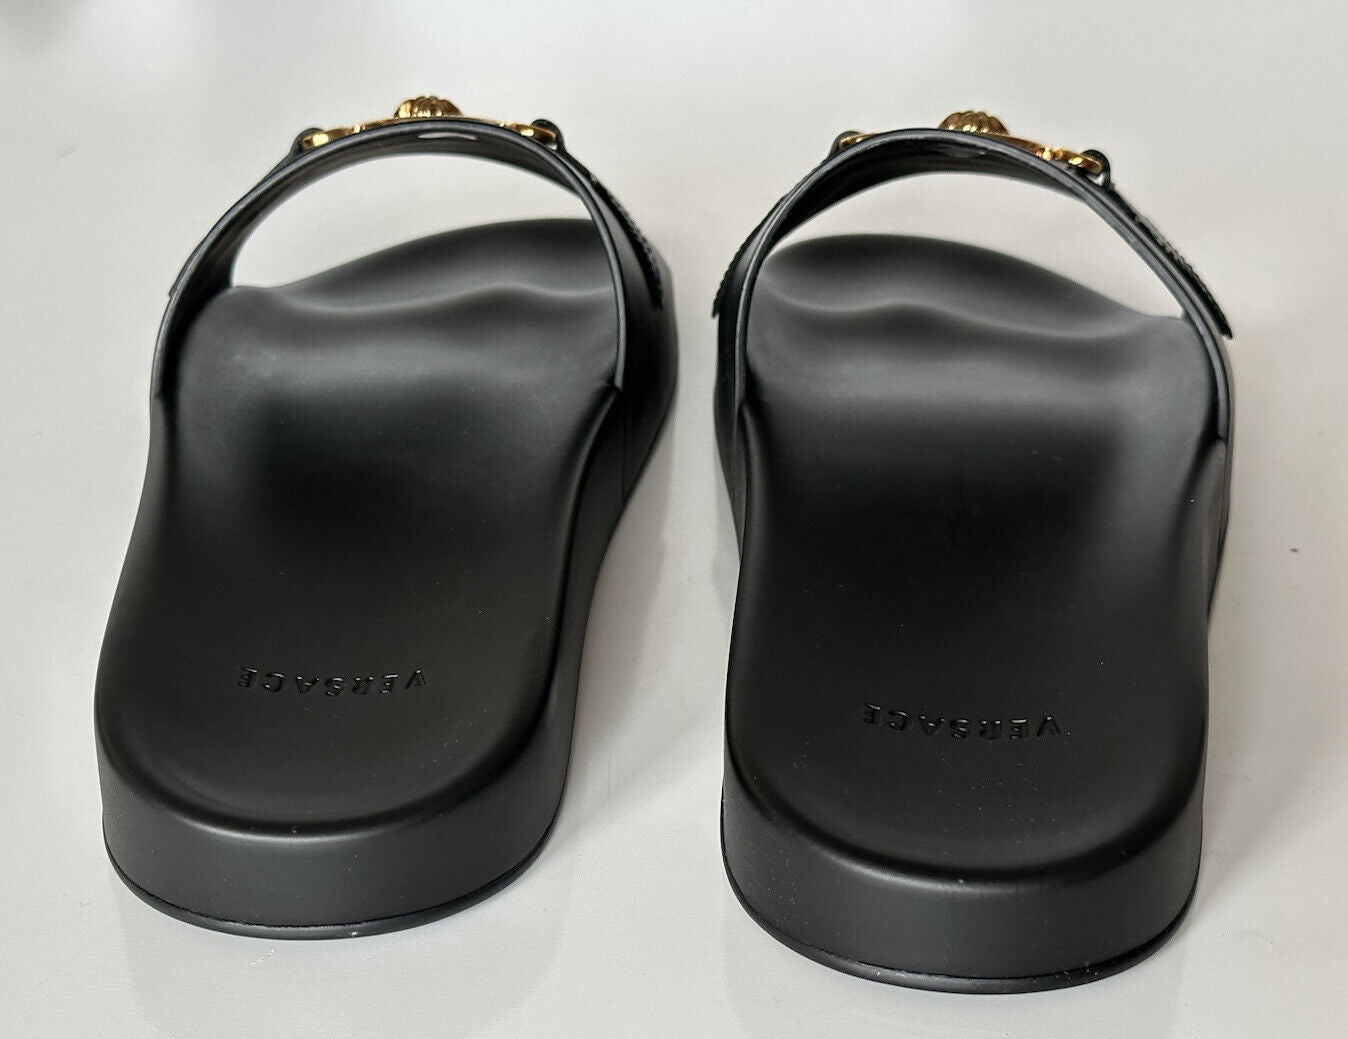 NIB $575 Versace Gold Medusa Leather/Rubber Sandals Black 12 US (45) 1004983 IT